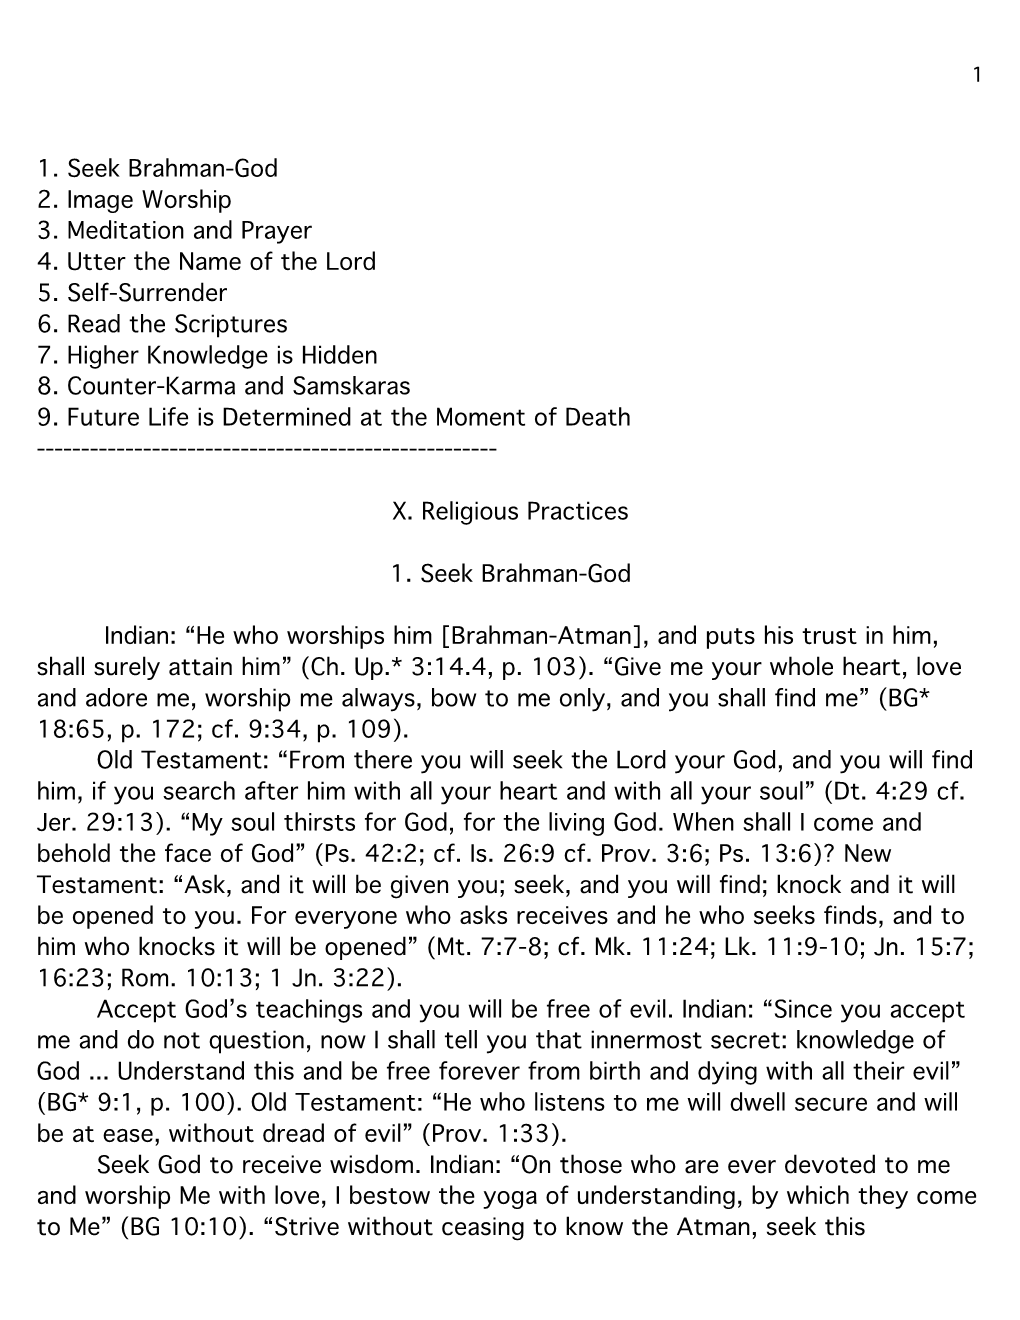 1. Seek Brahman-God 2. Image Worship 3. Meditation and Prayer 4